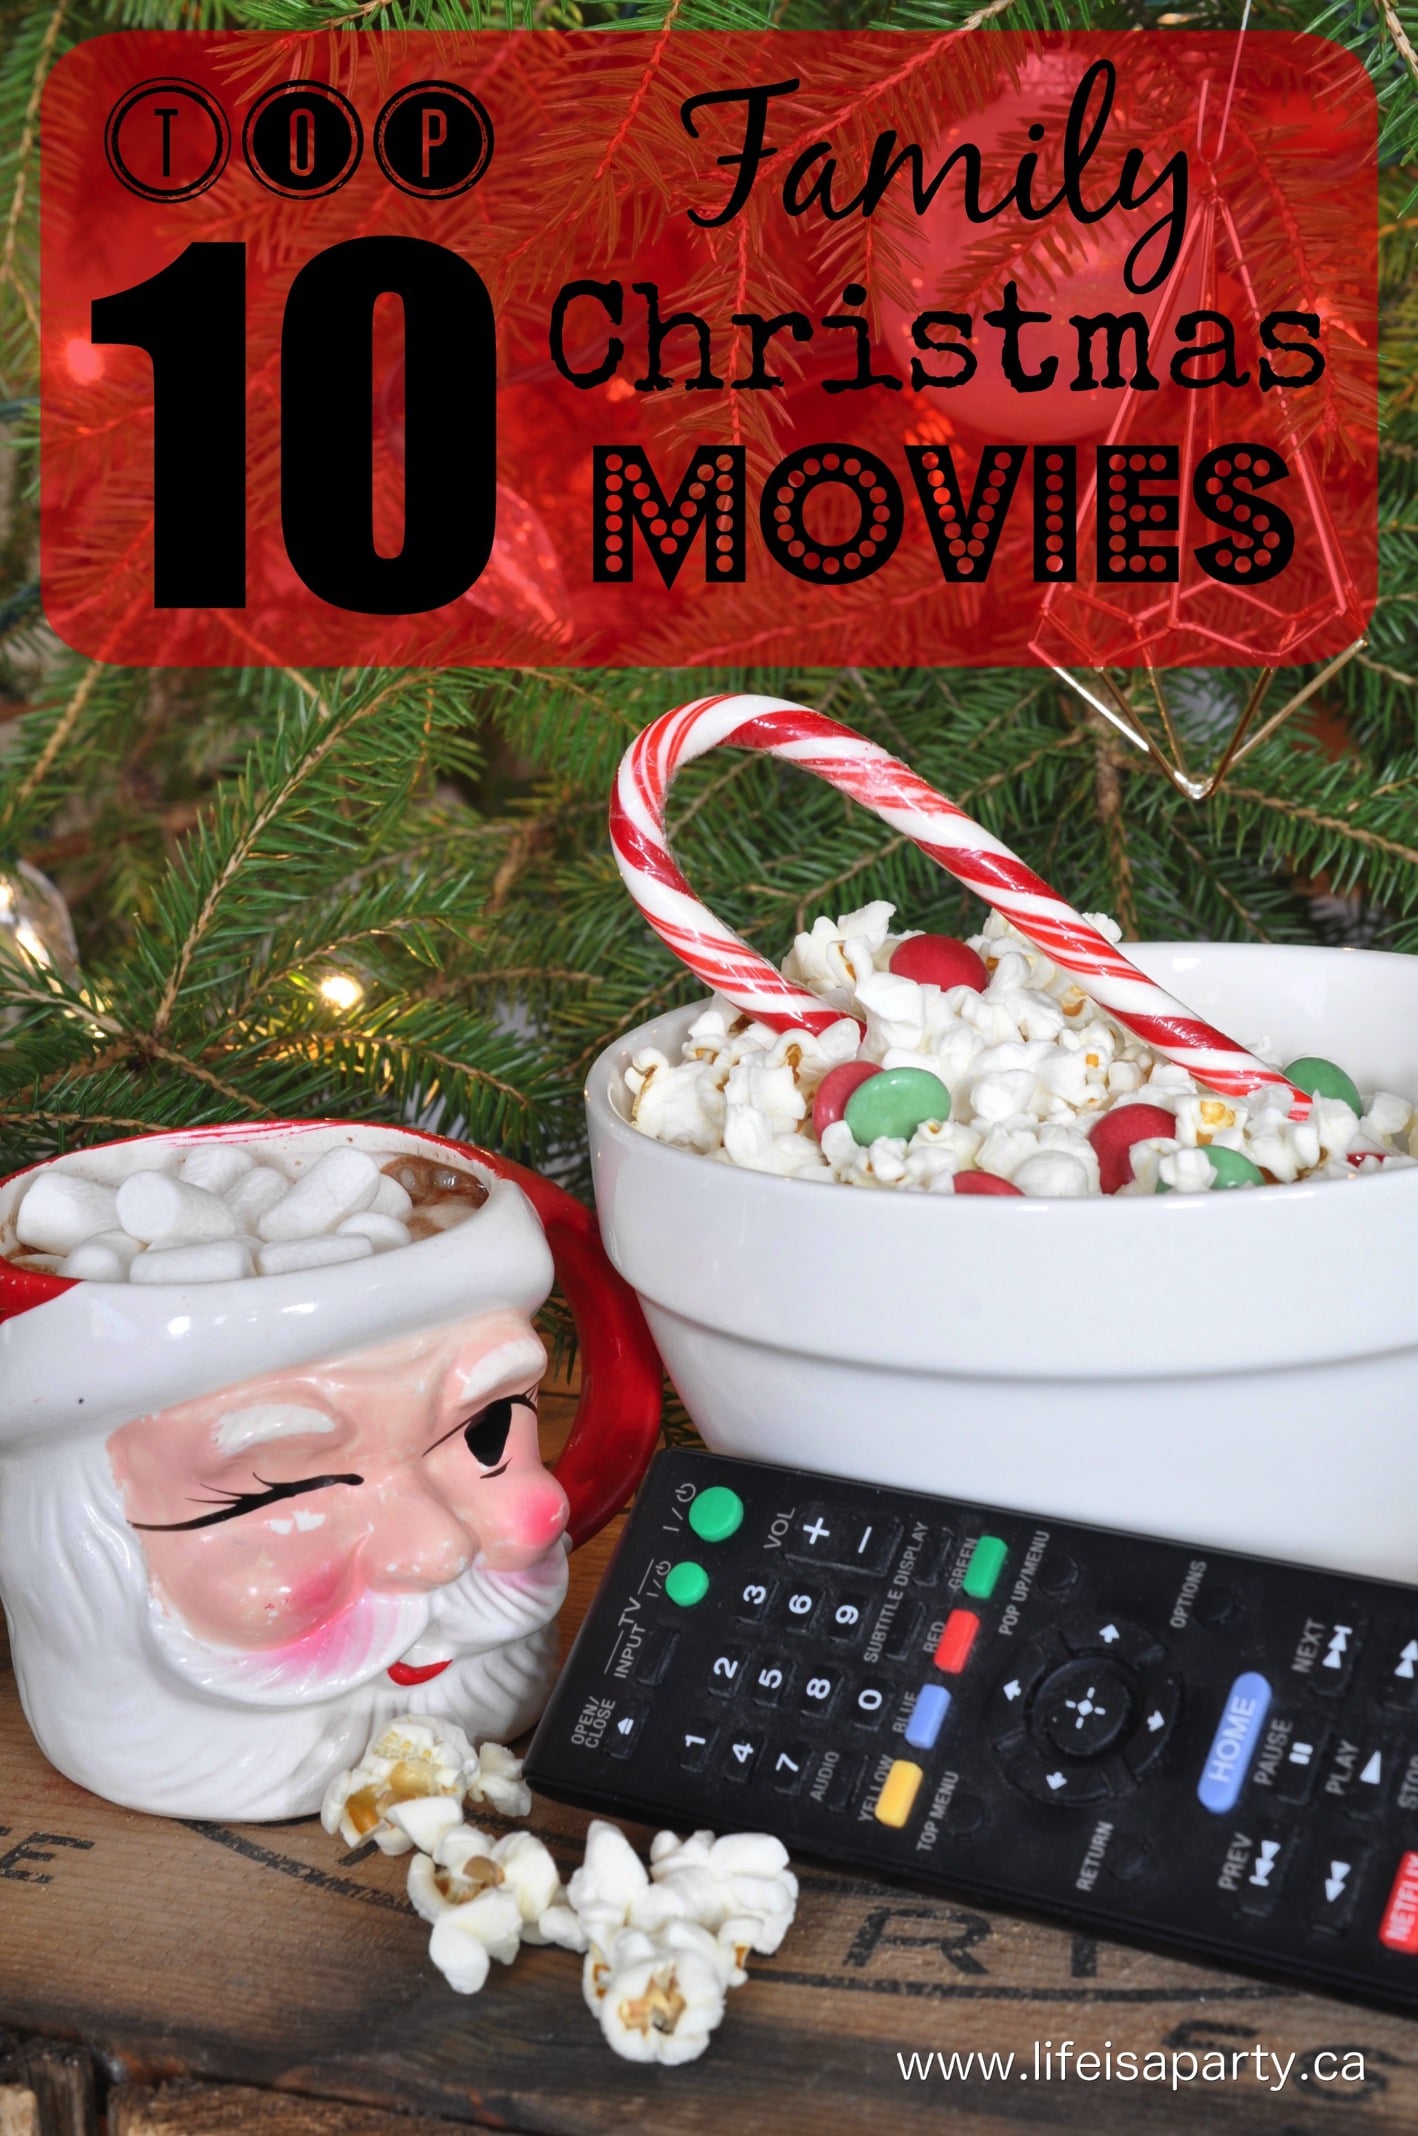 Top 10 Family Christmas Movies